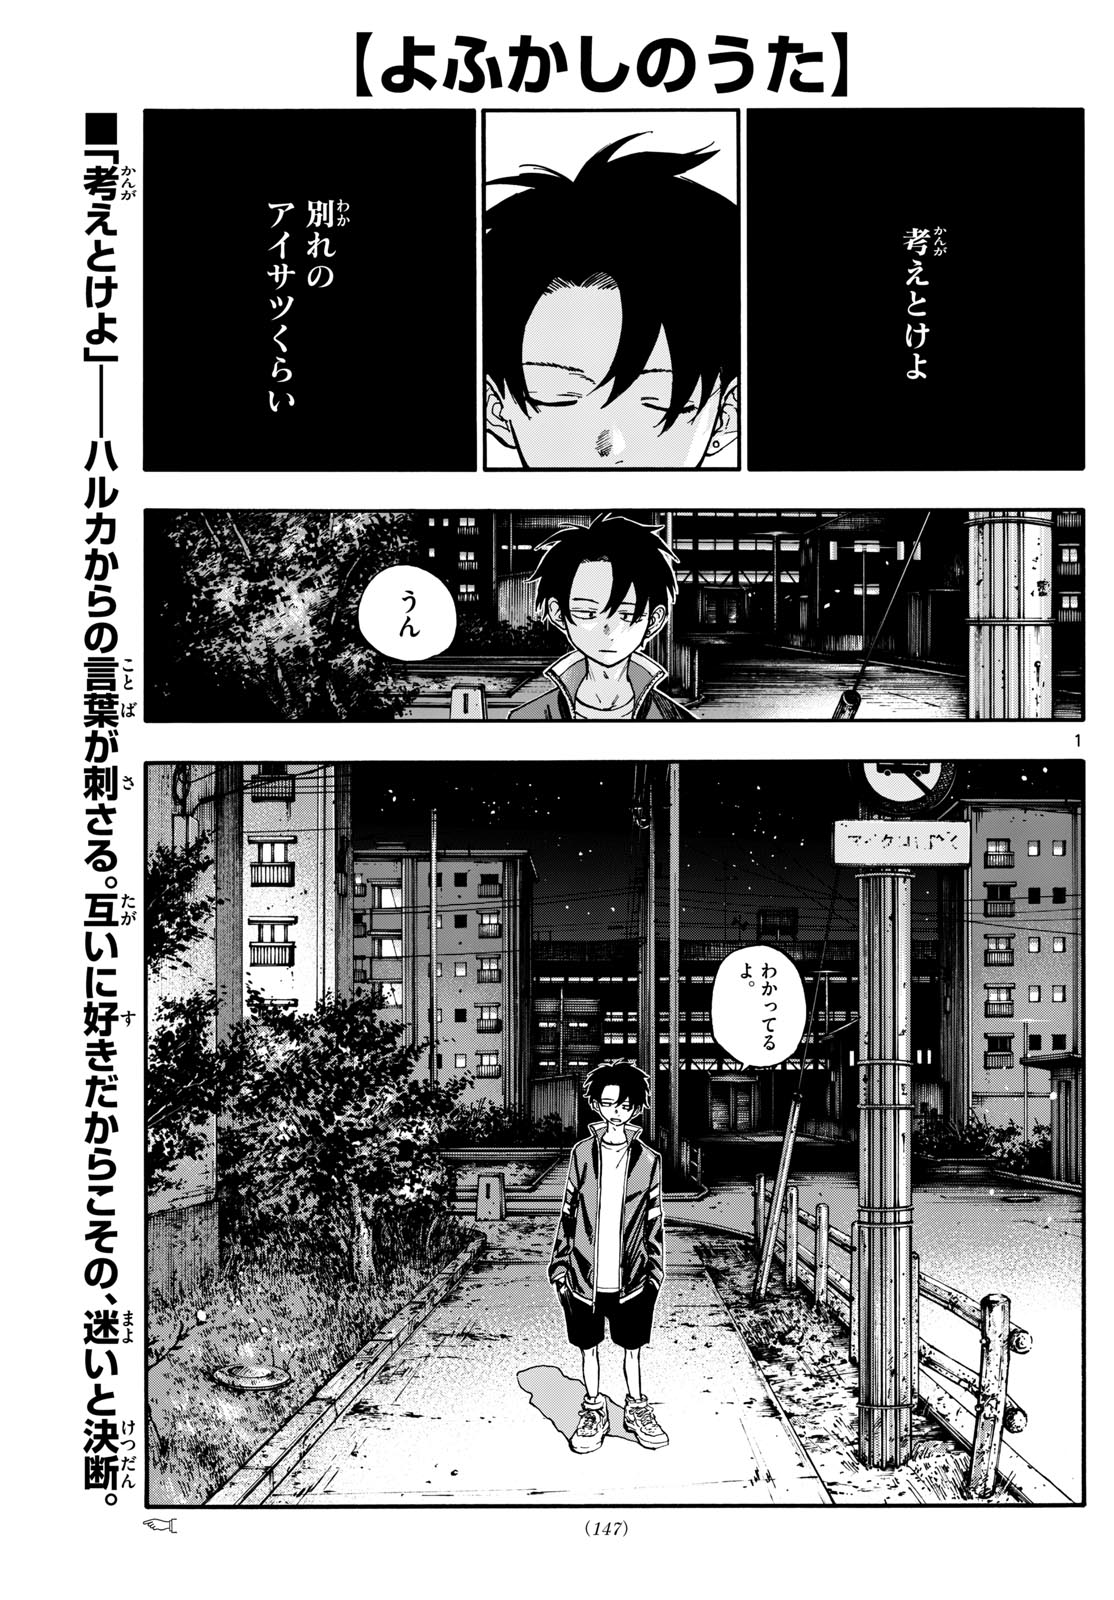 Yofukashi no Uta - Chapter 194 - Page 1